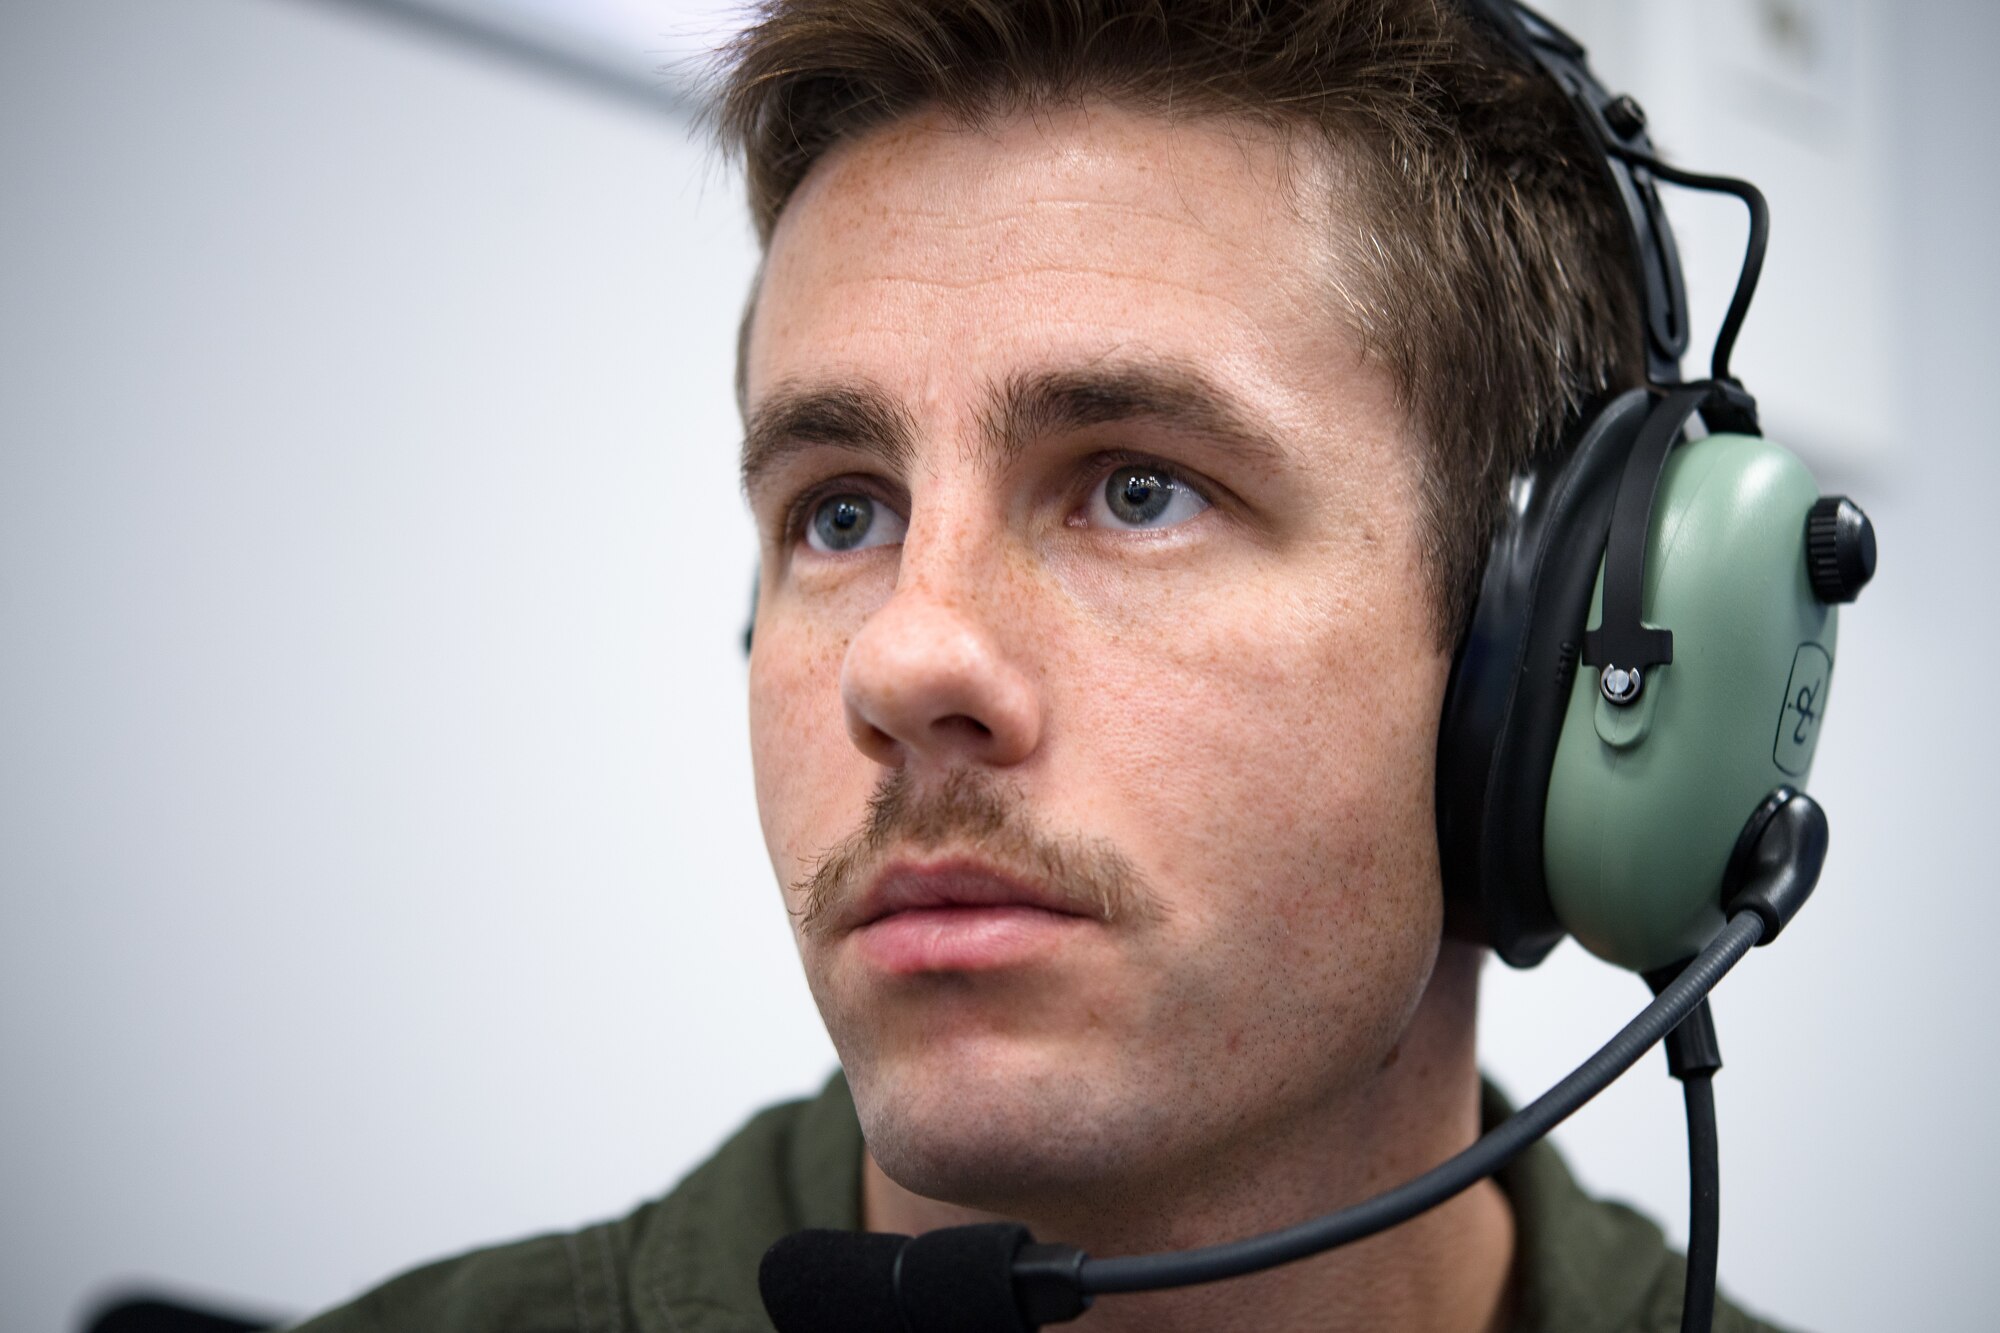 Photo of Airman wearing headset